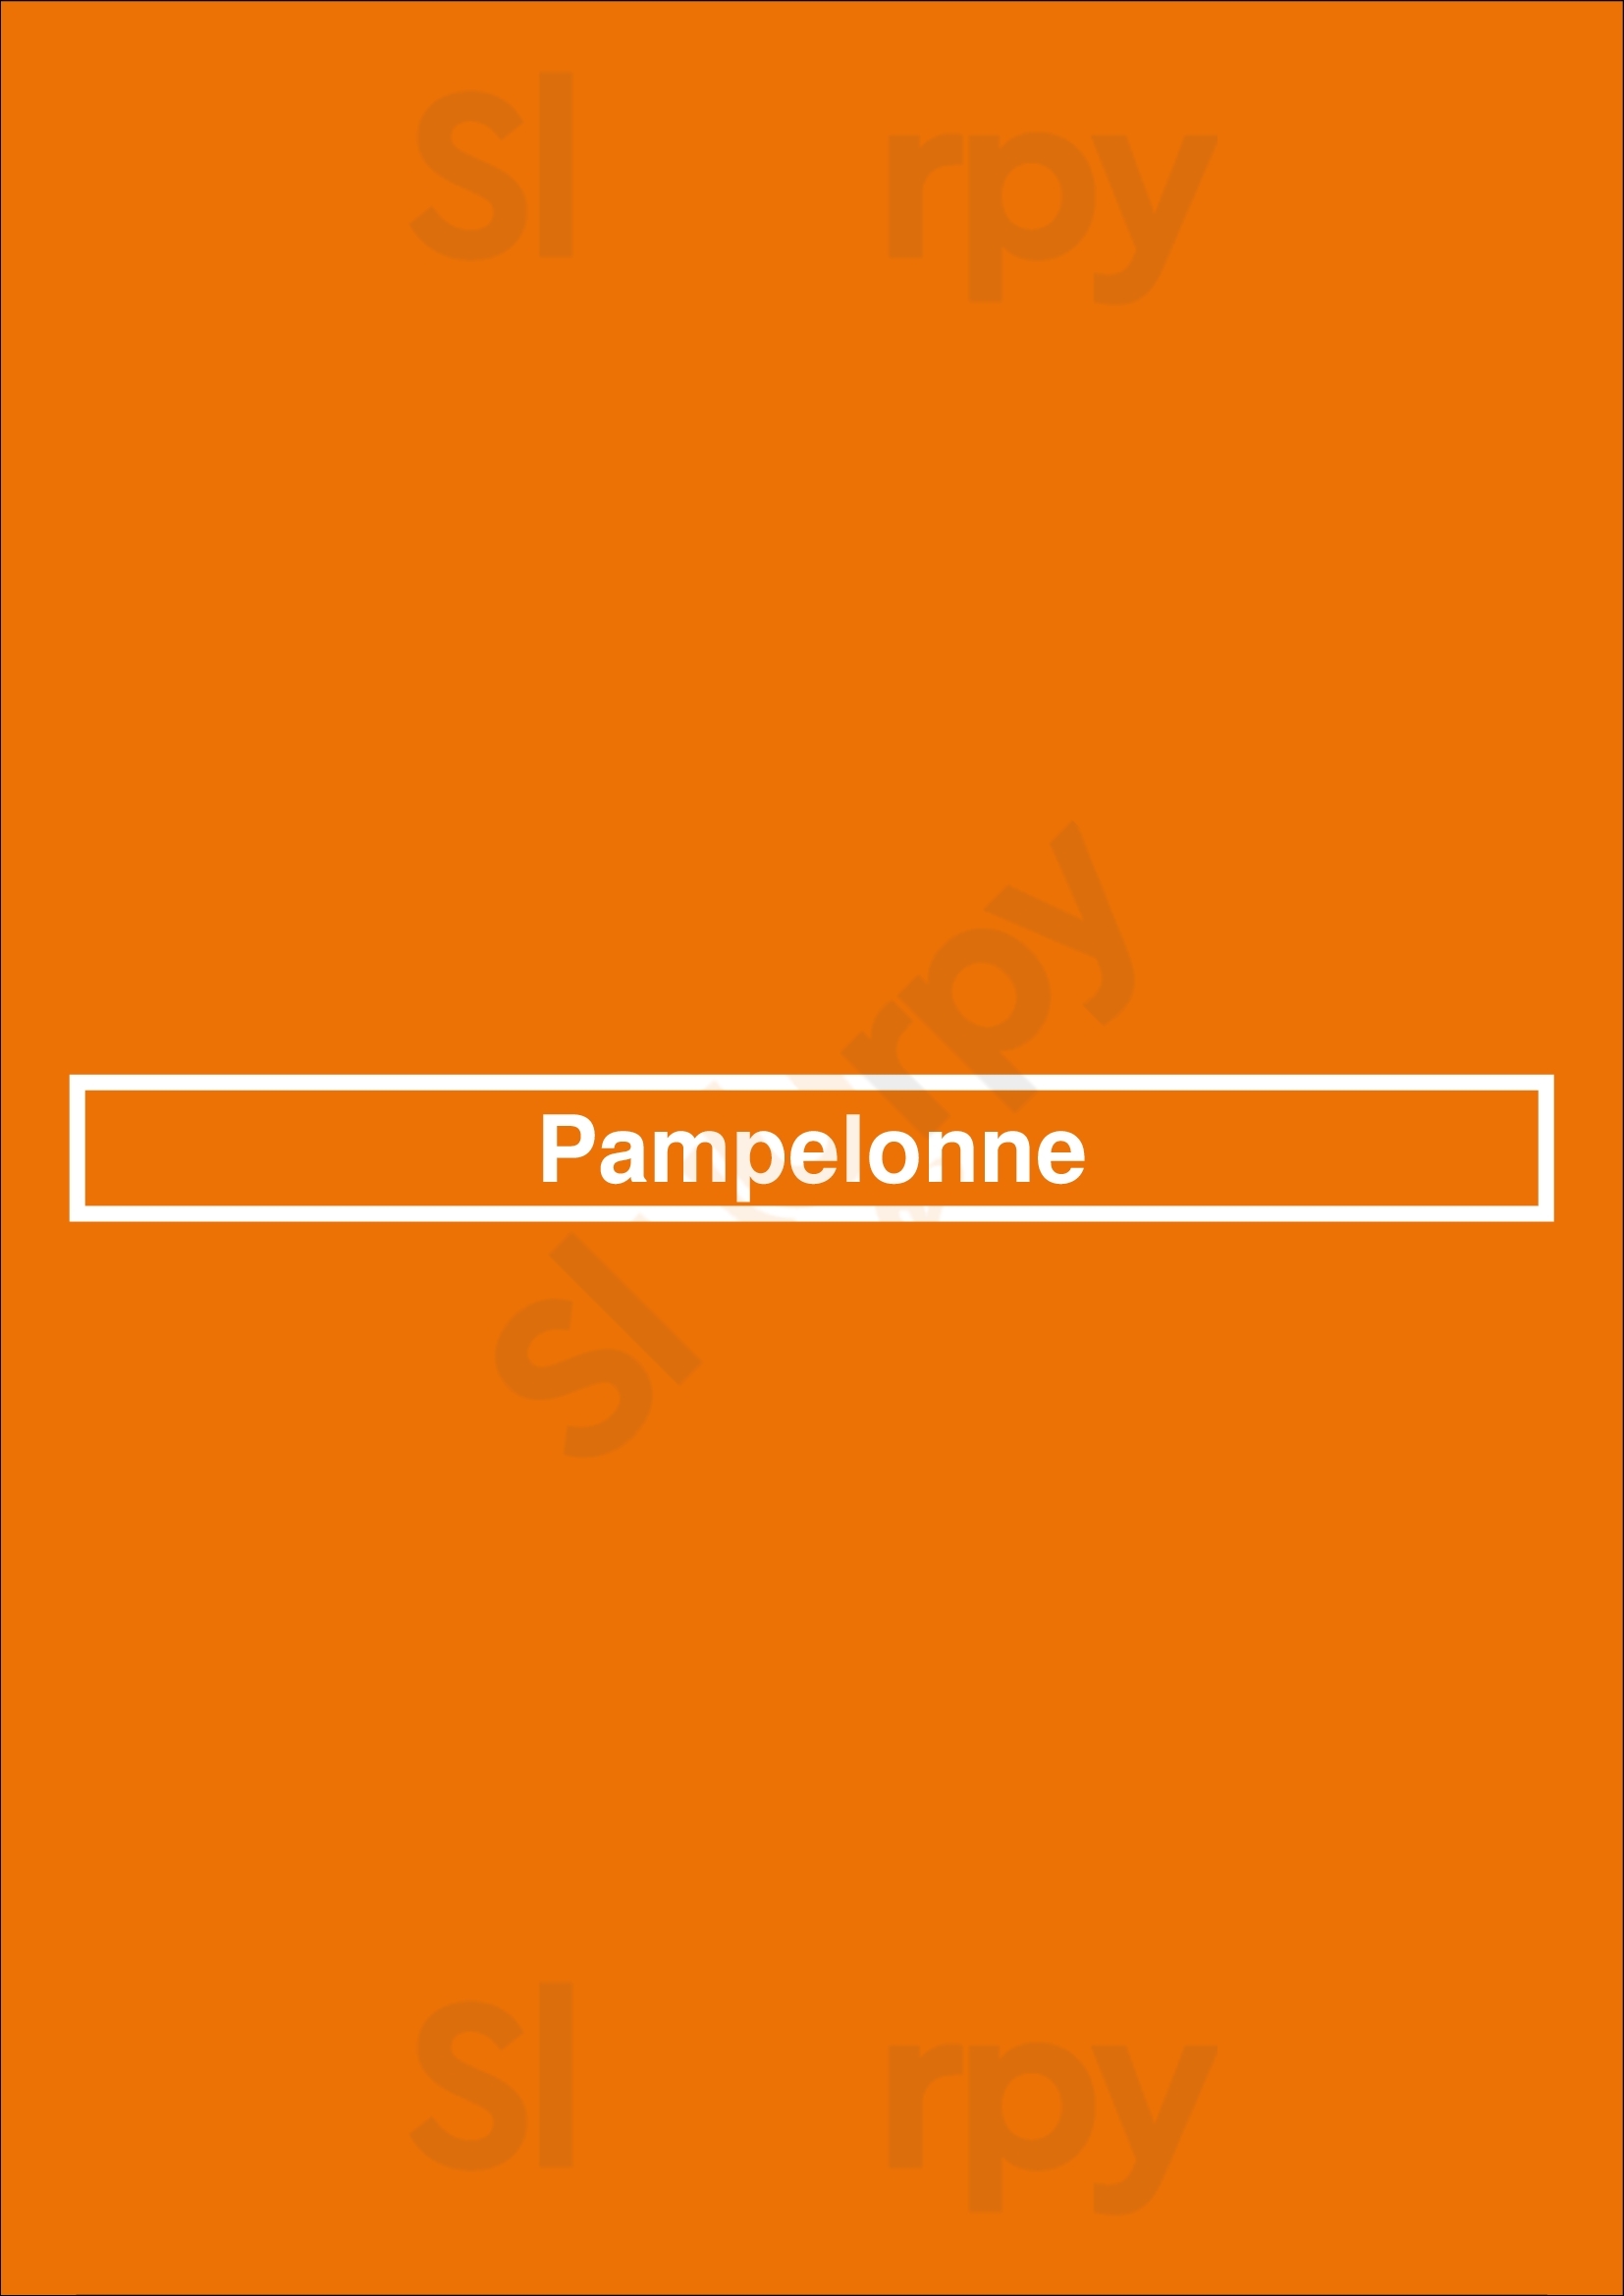 Pampelonne Breda Menu - 1